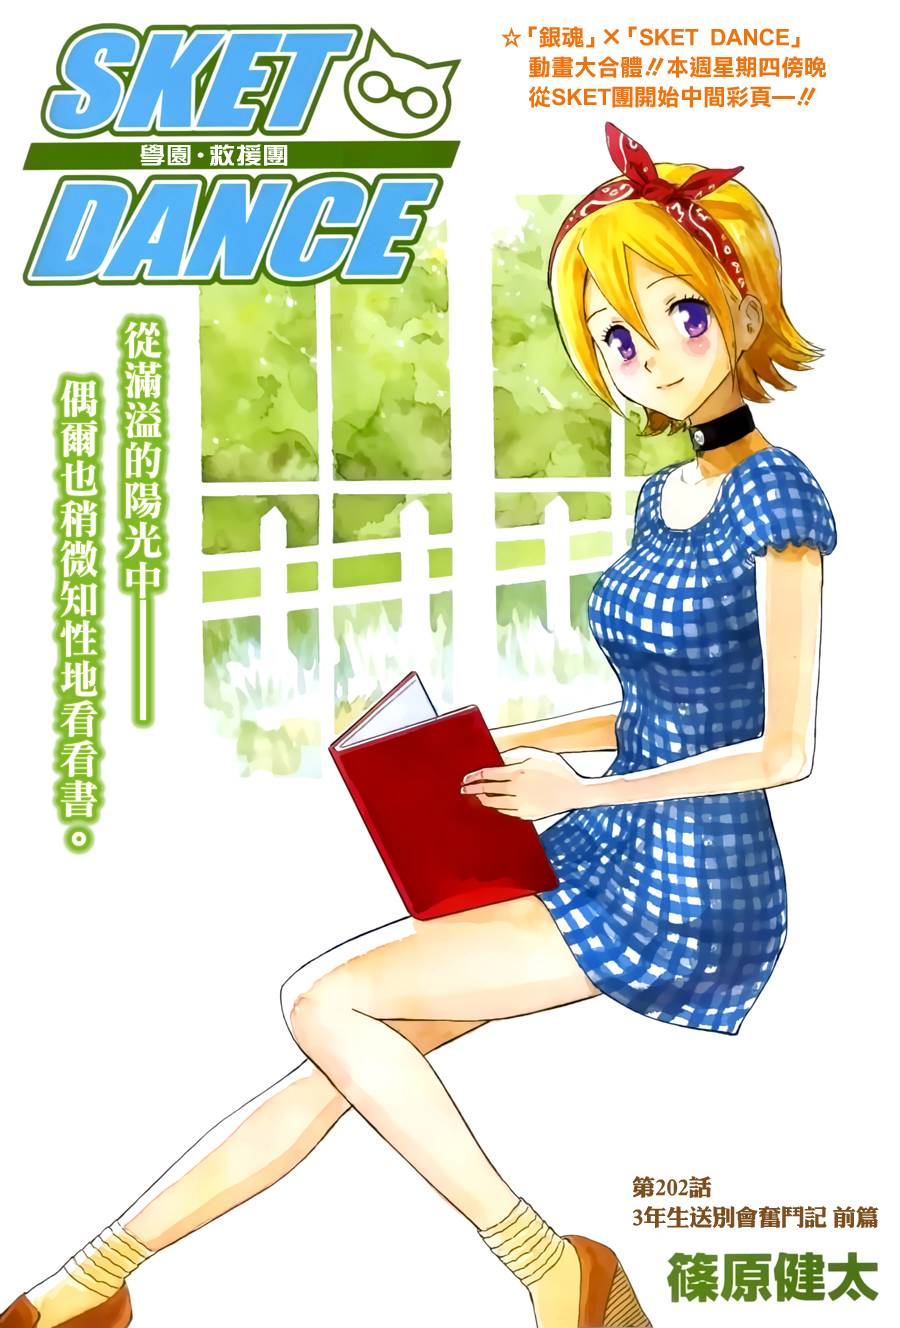 Sket Dance 第2話 漫畫線上看 動漫戲說 Acgn Cc